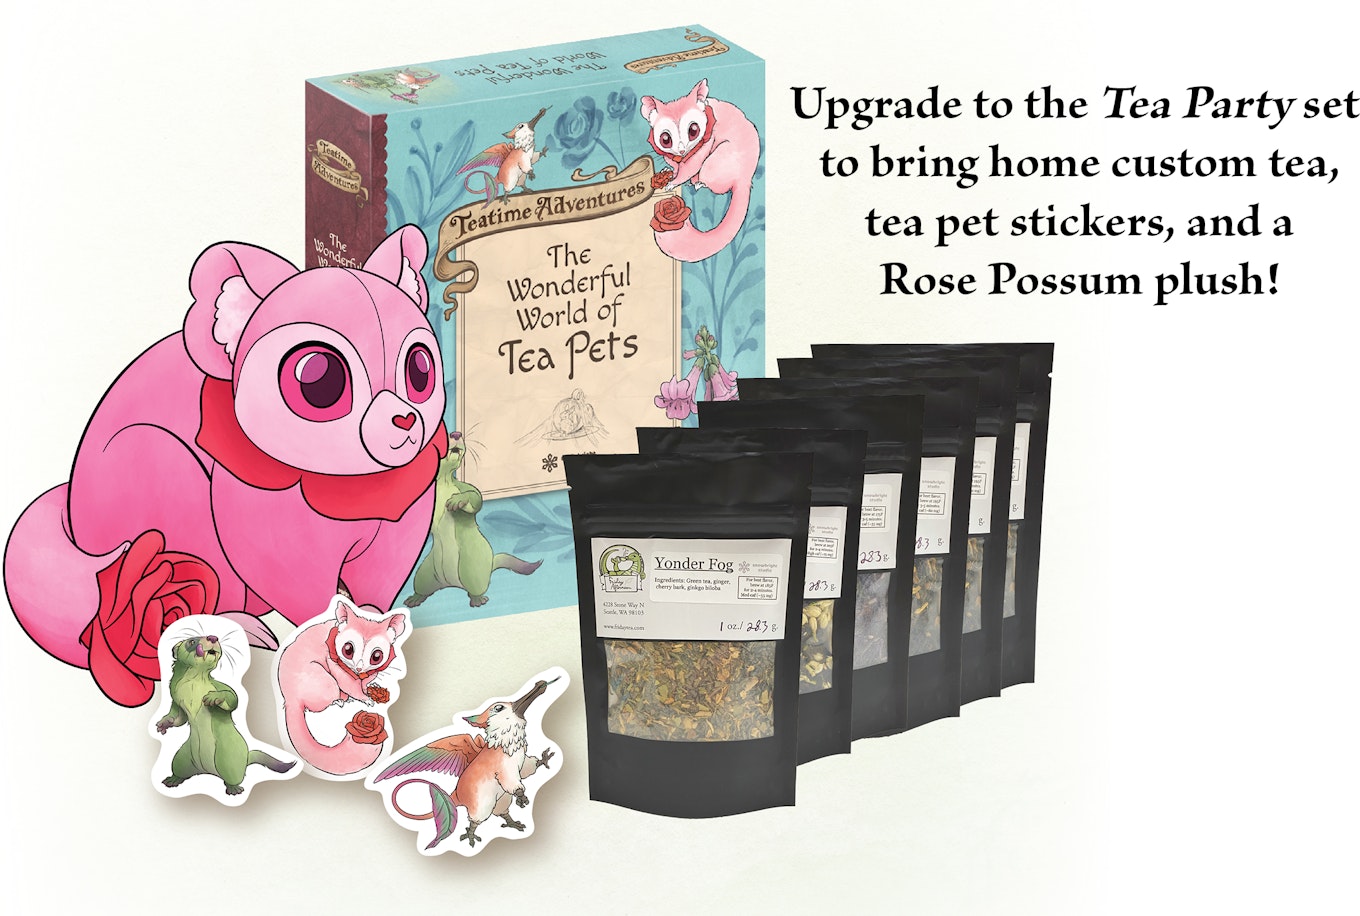 Upgrade to the Tea Party set to bring home custom tea, tea pet stickers, and a Rose Possum plush!